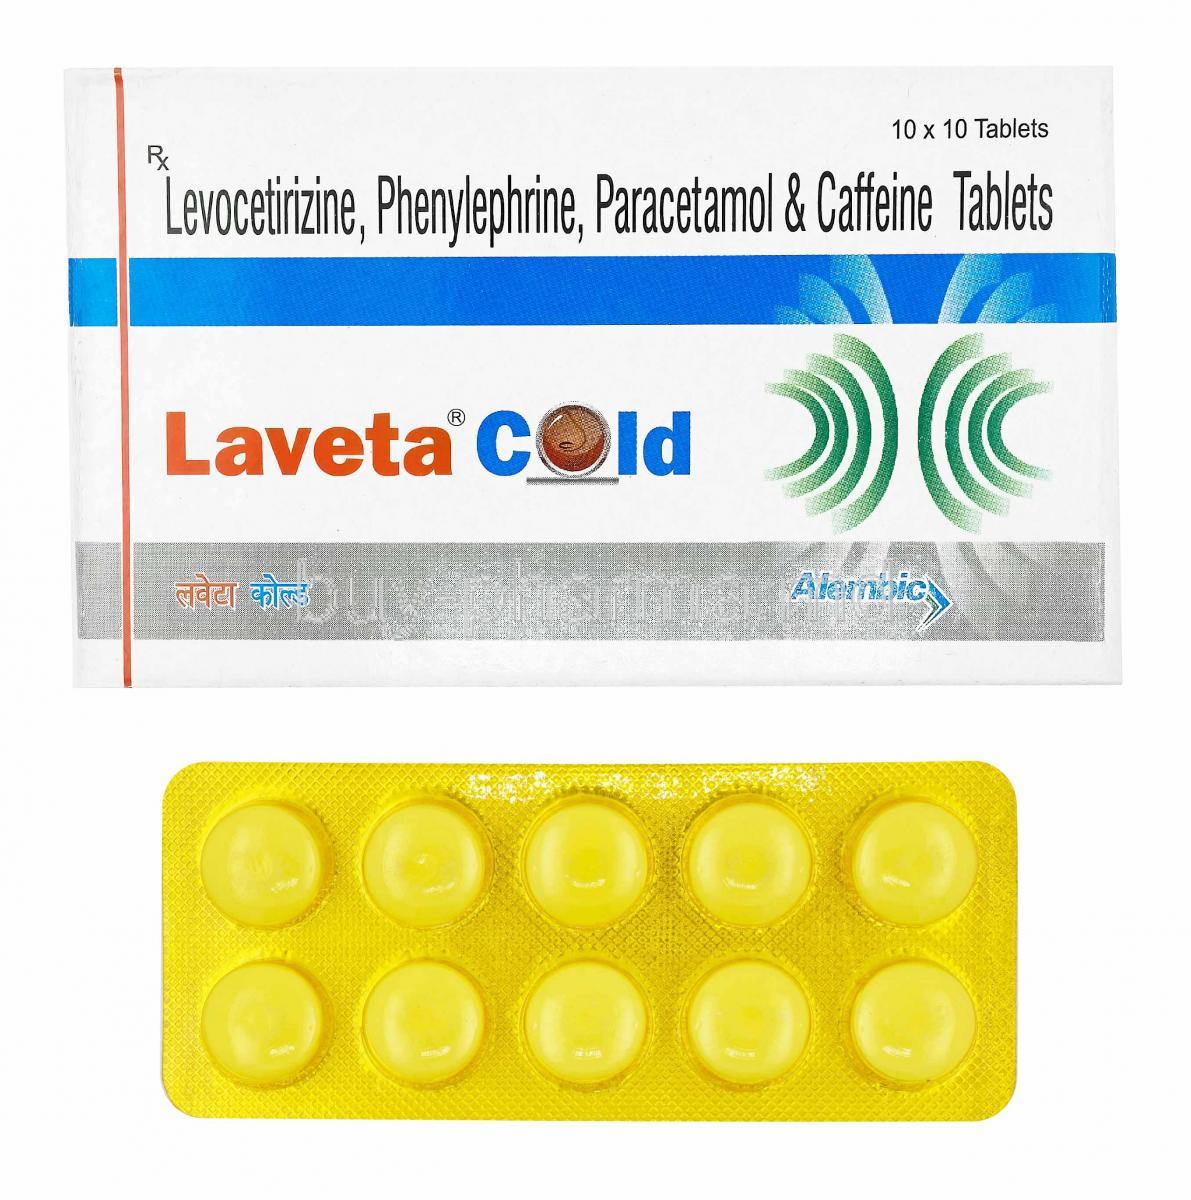 Laveta Cold, Caffeine, Chlorpheniramine, Paracetamol and Phenylephrine  box and tablets